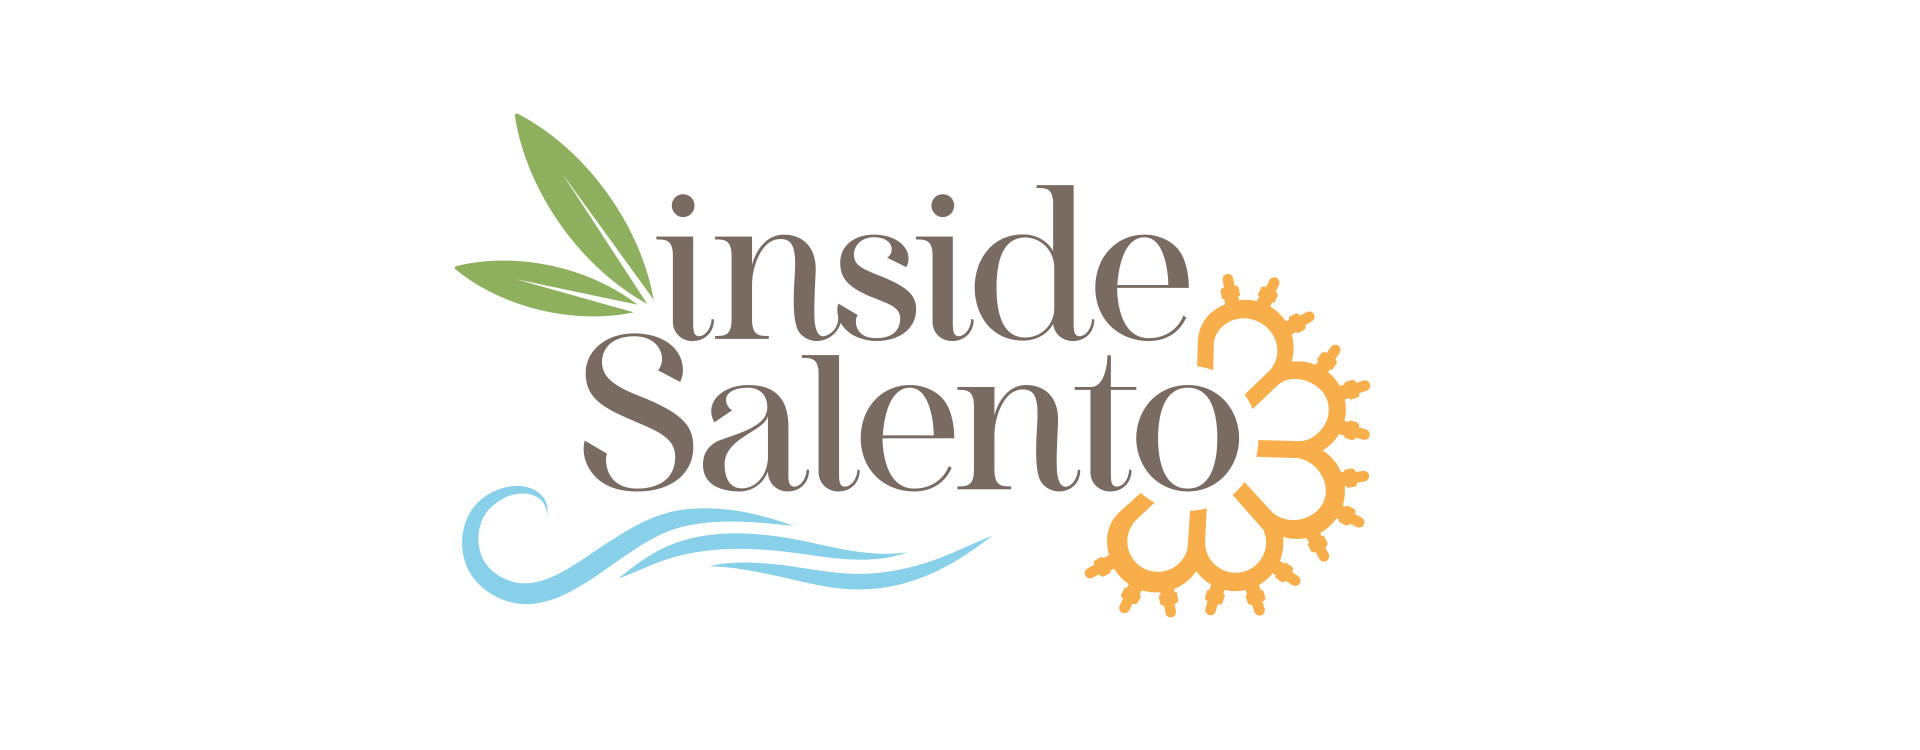 Inside Salento – logo by OTQ